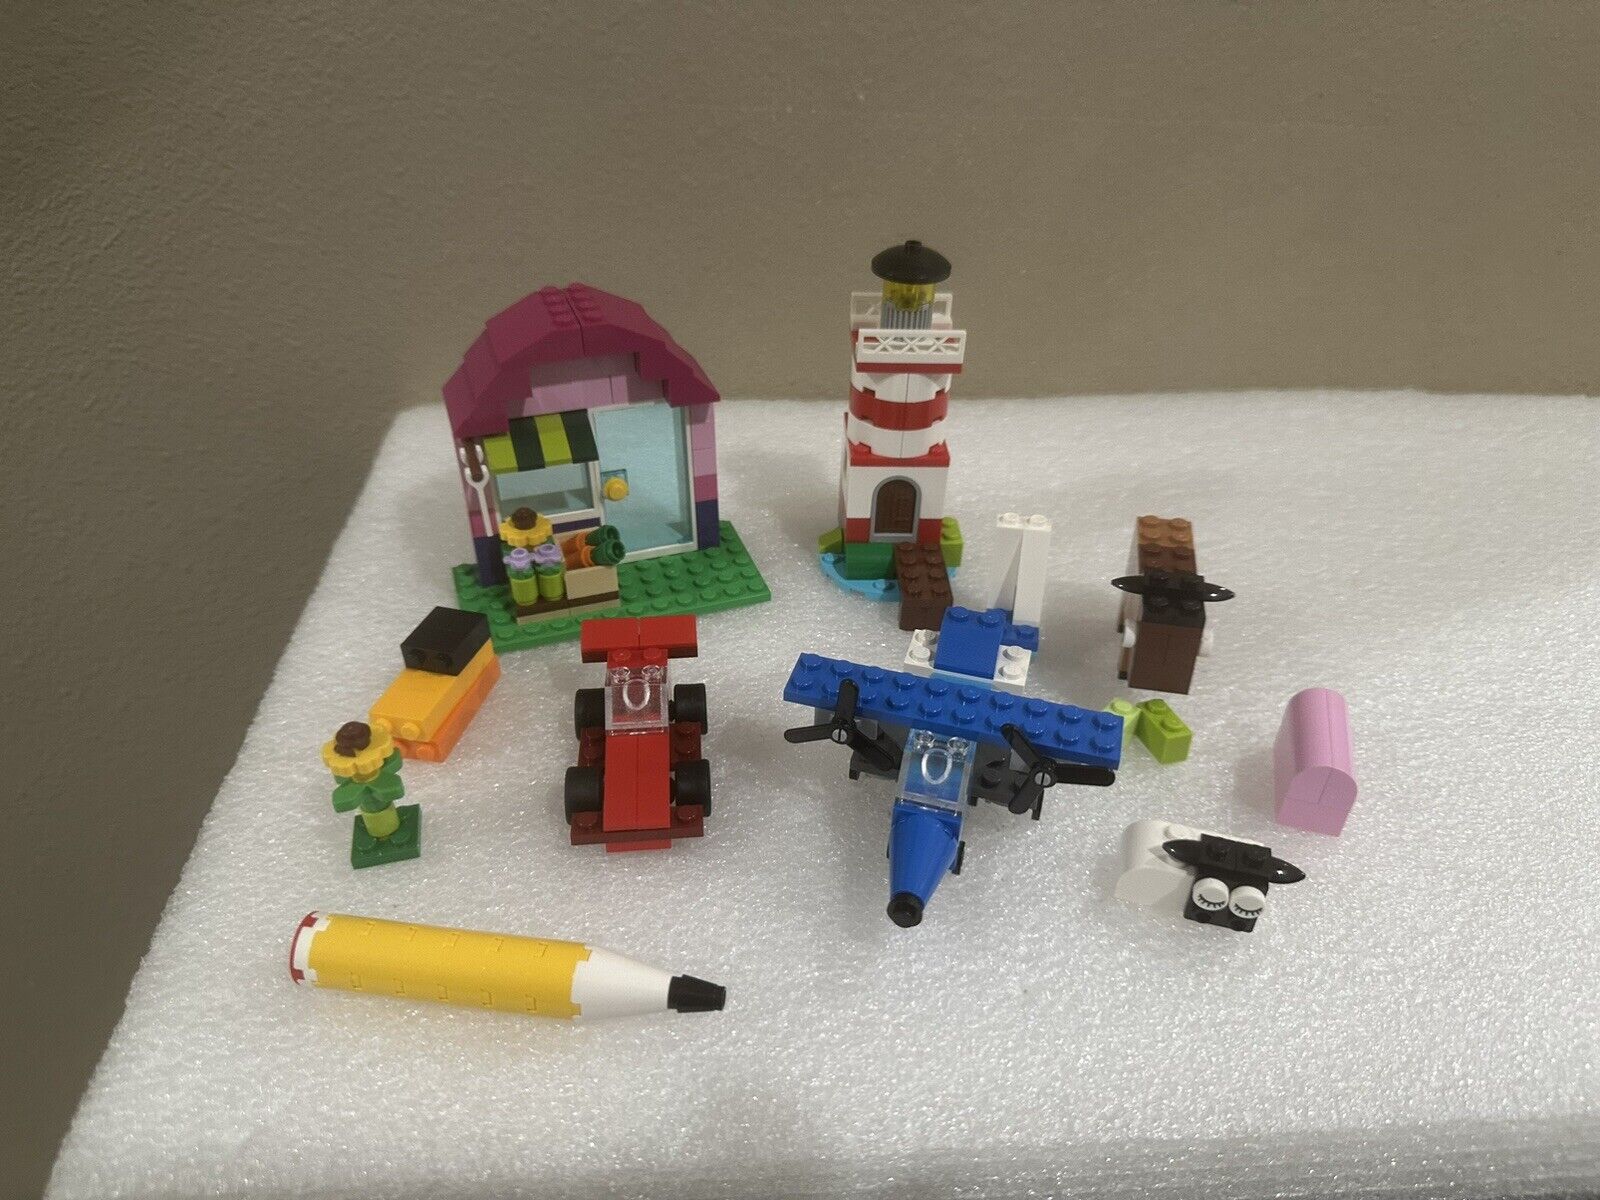 LEGO CLASSIC: Creative Bricks (10692)